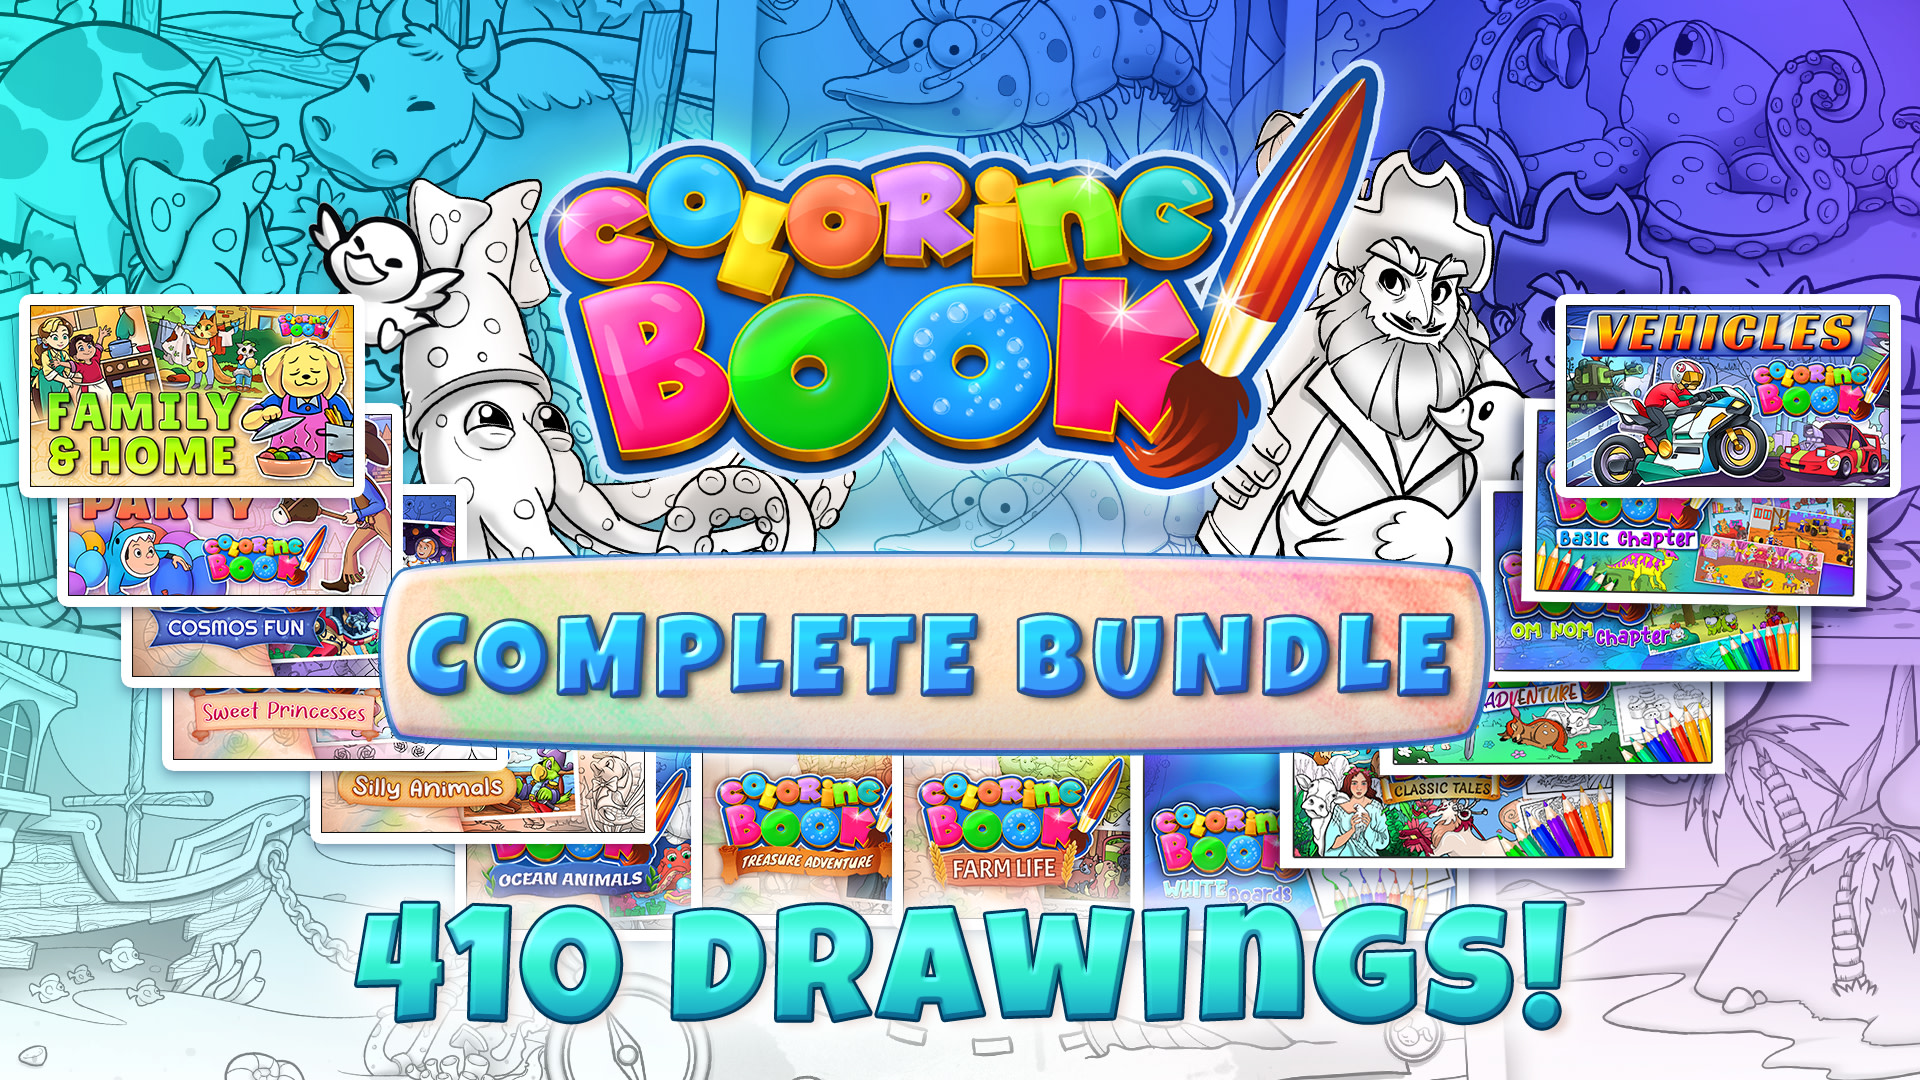 Coloring Book: Complete Bundle - 410 drawings